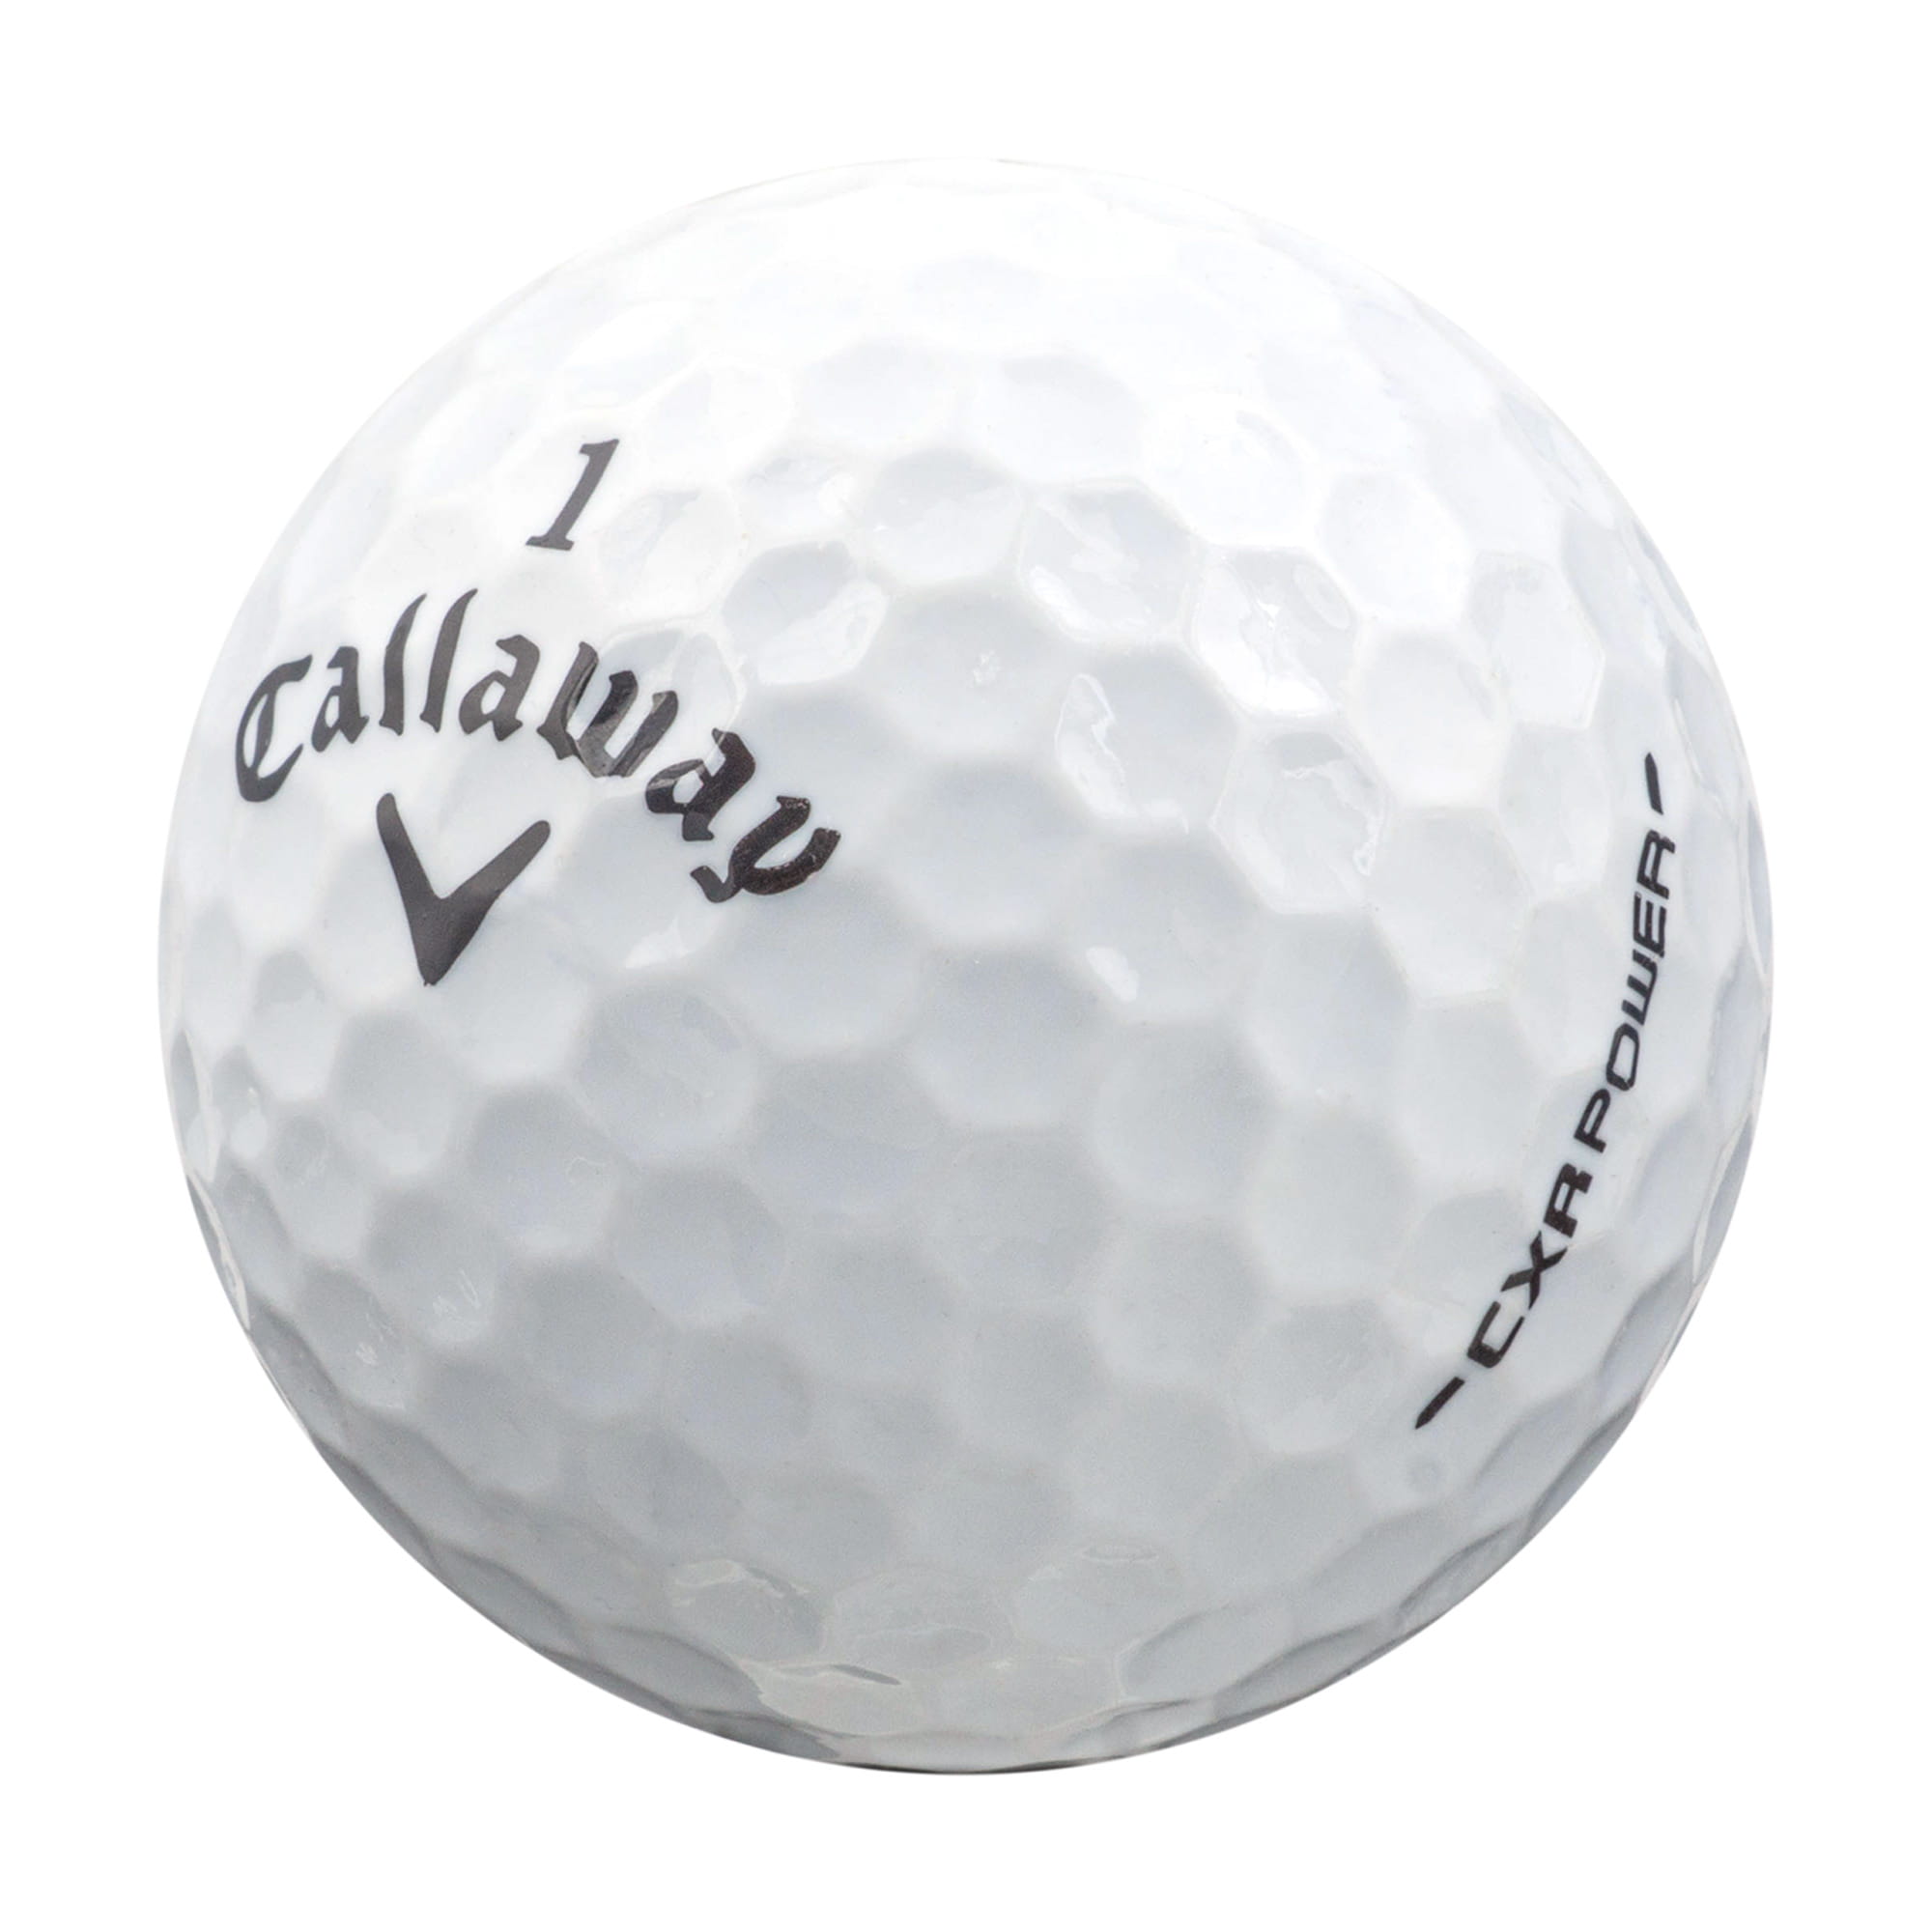 Callaway CXR Power Lake Balls | EASY LAKEBALLS UK - FIND YOUR GOLF BALL